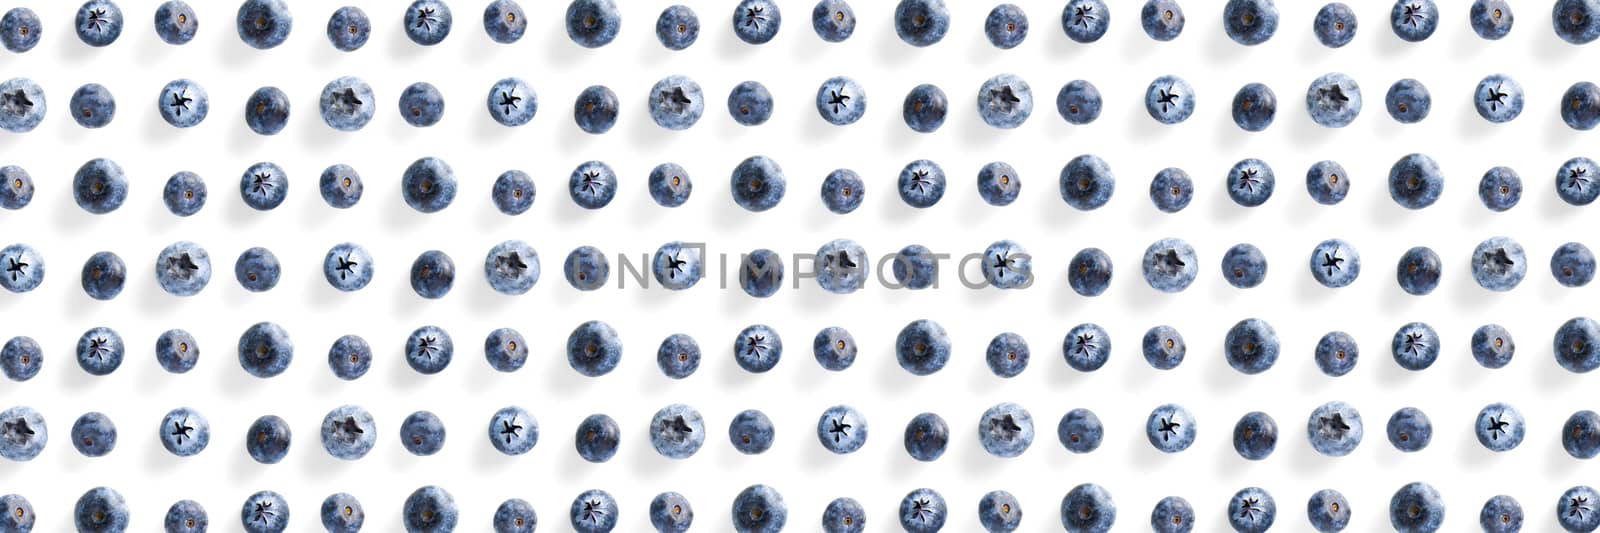 Background of Freshly picked blueberries on white backdrop. Blackberry modern flatlay background. banner wide shot